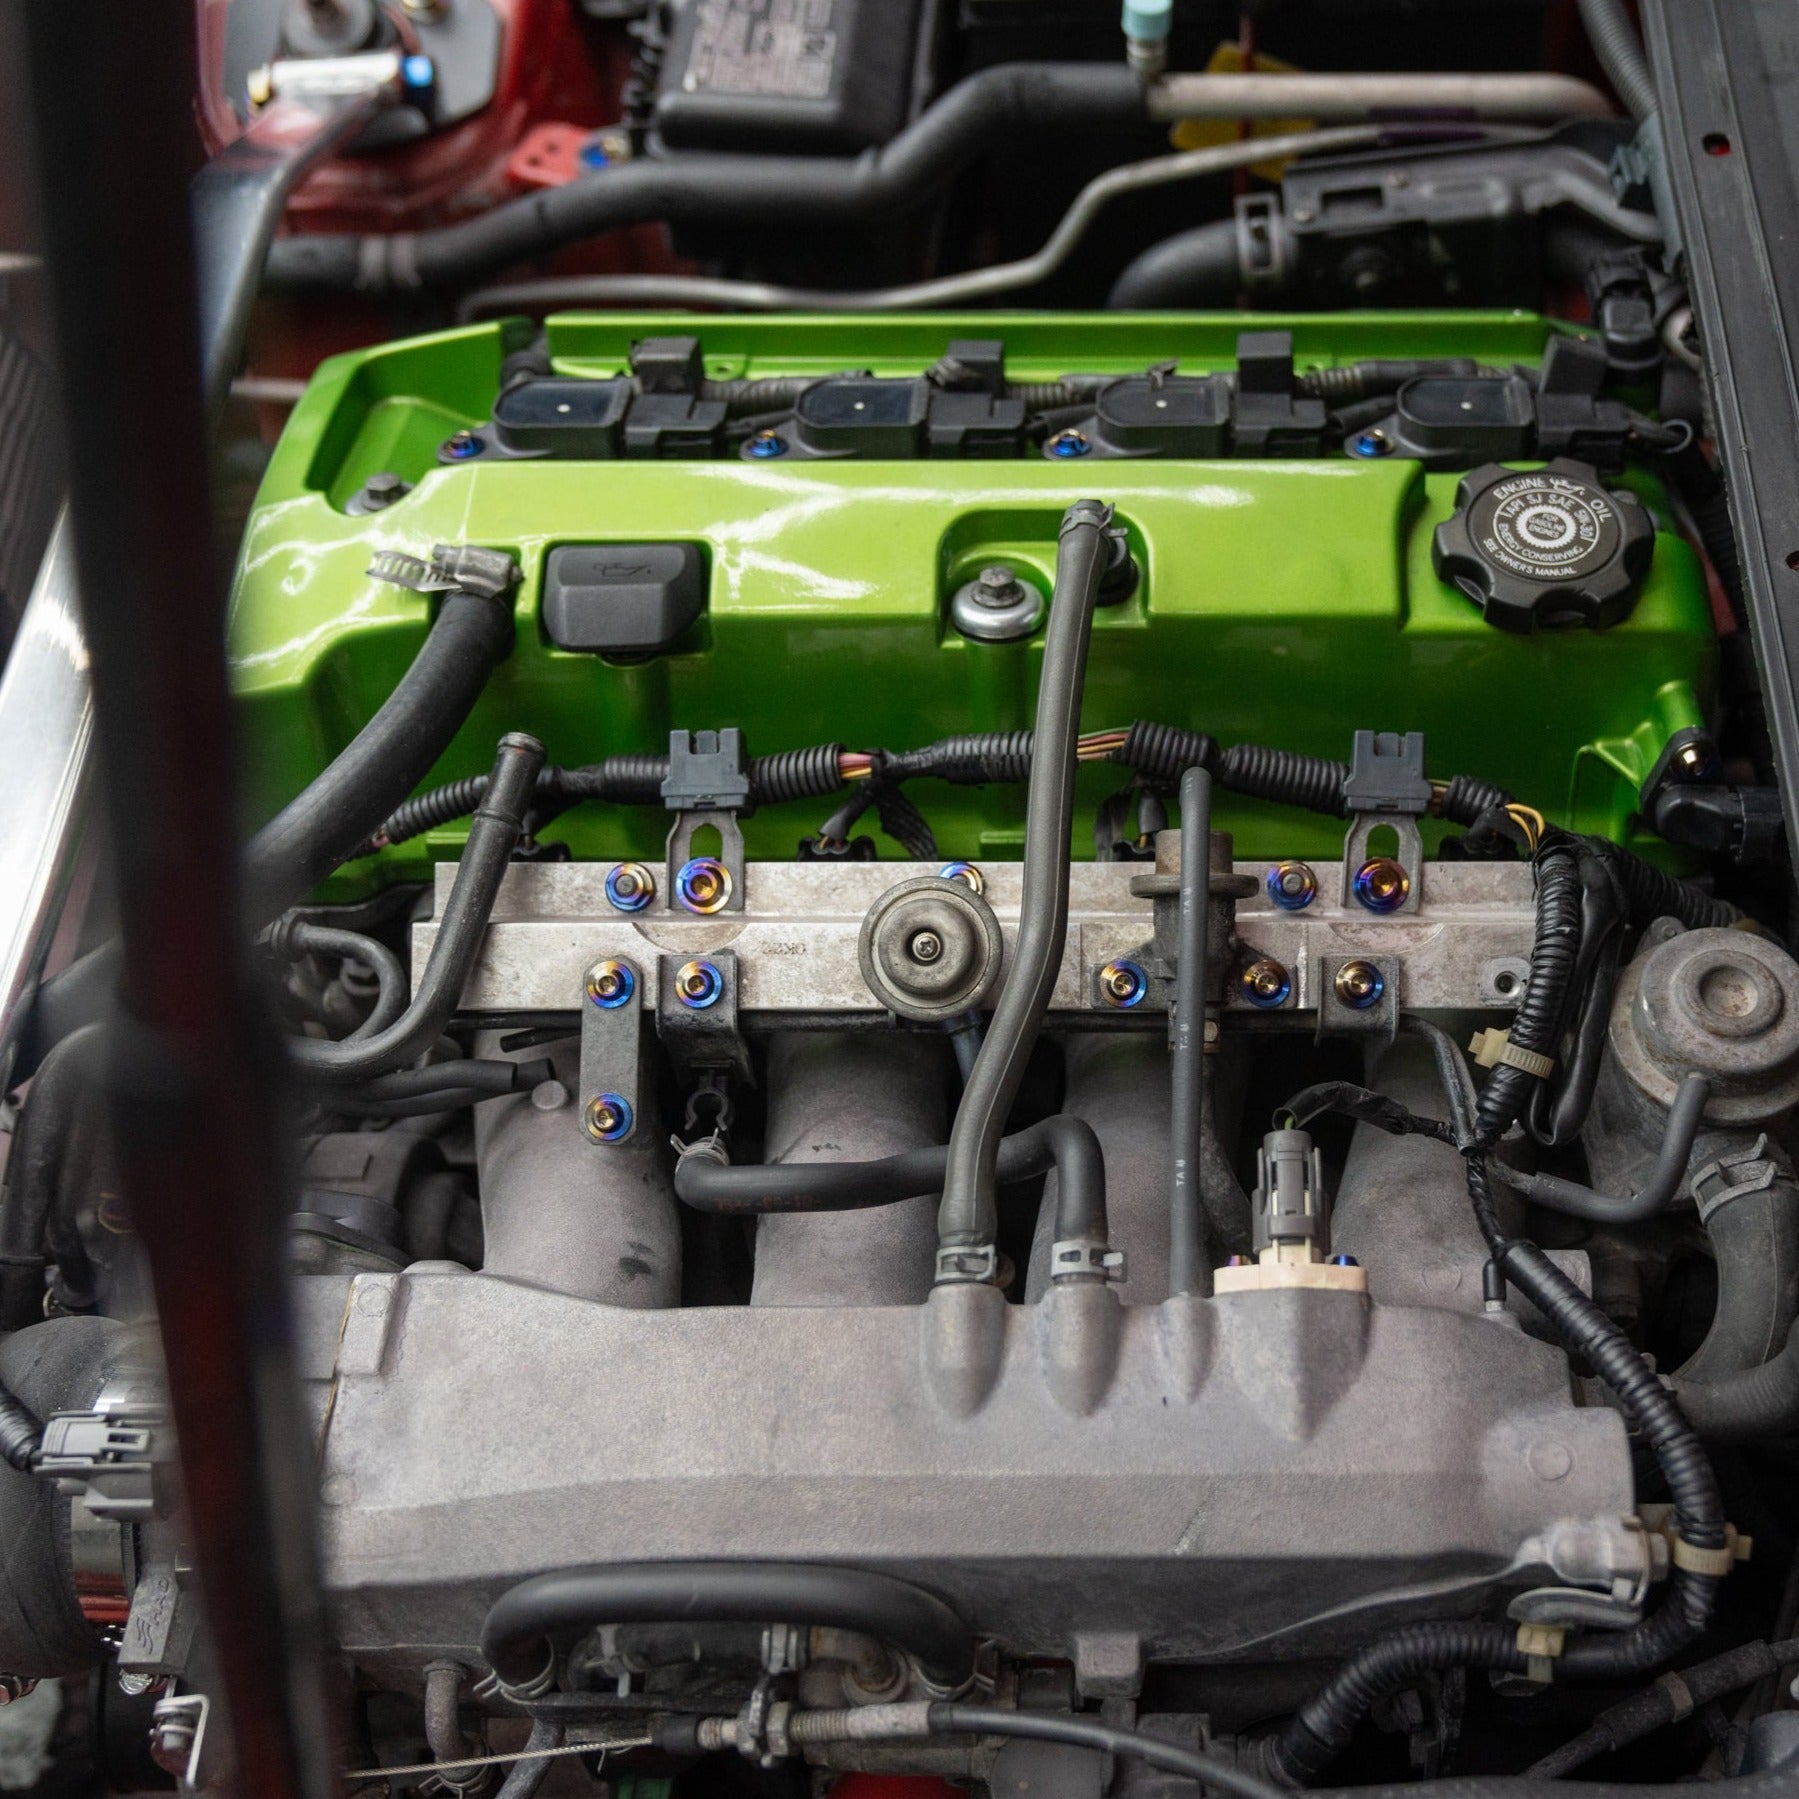 Kit de reemplazo de hardware del compartimiento completo del motor JDC Titanium (Honda S2000)